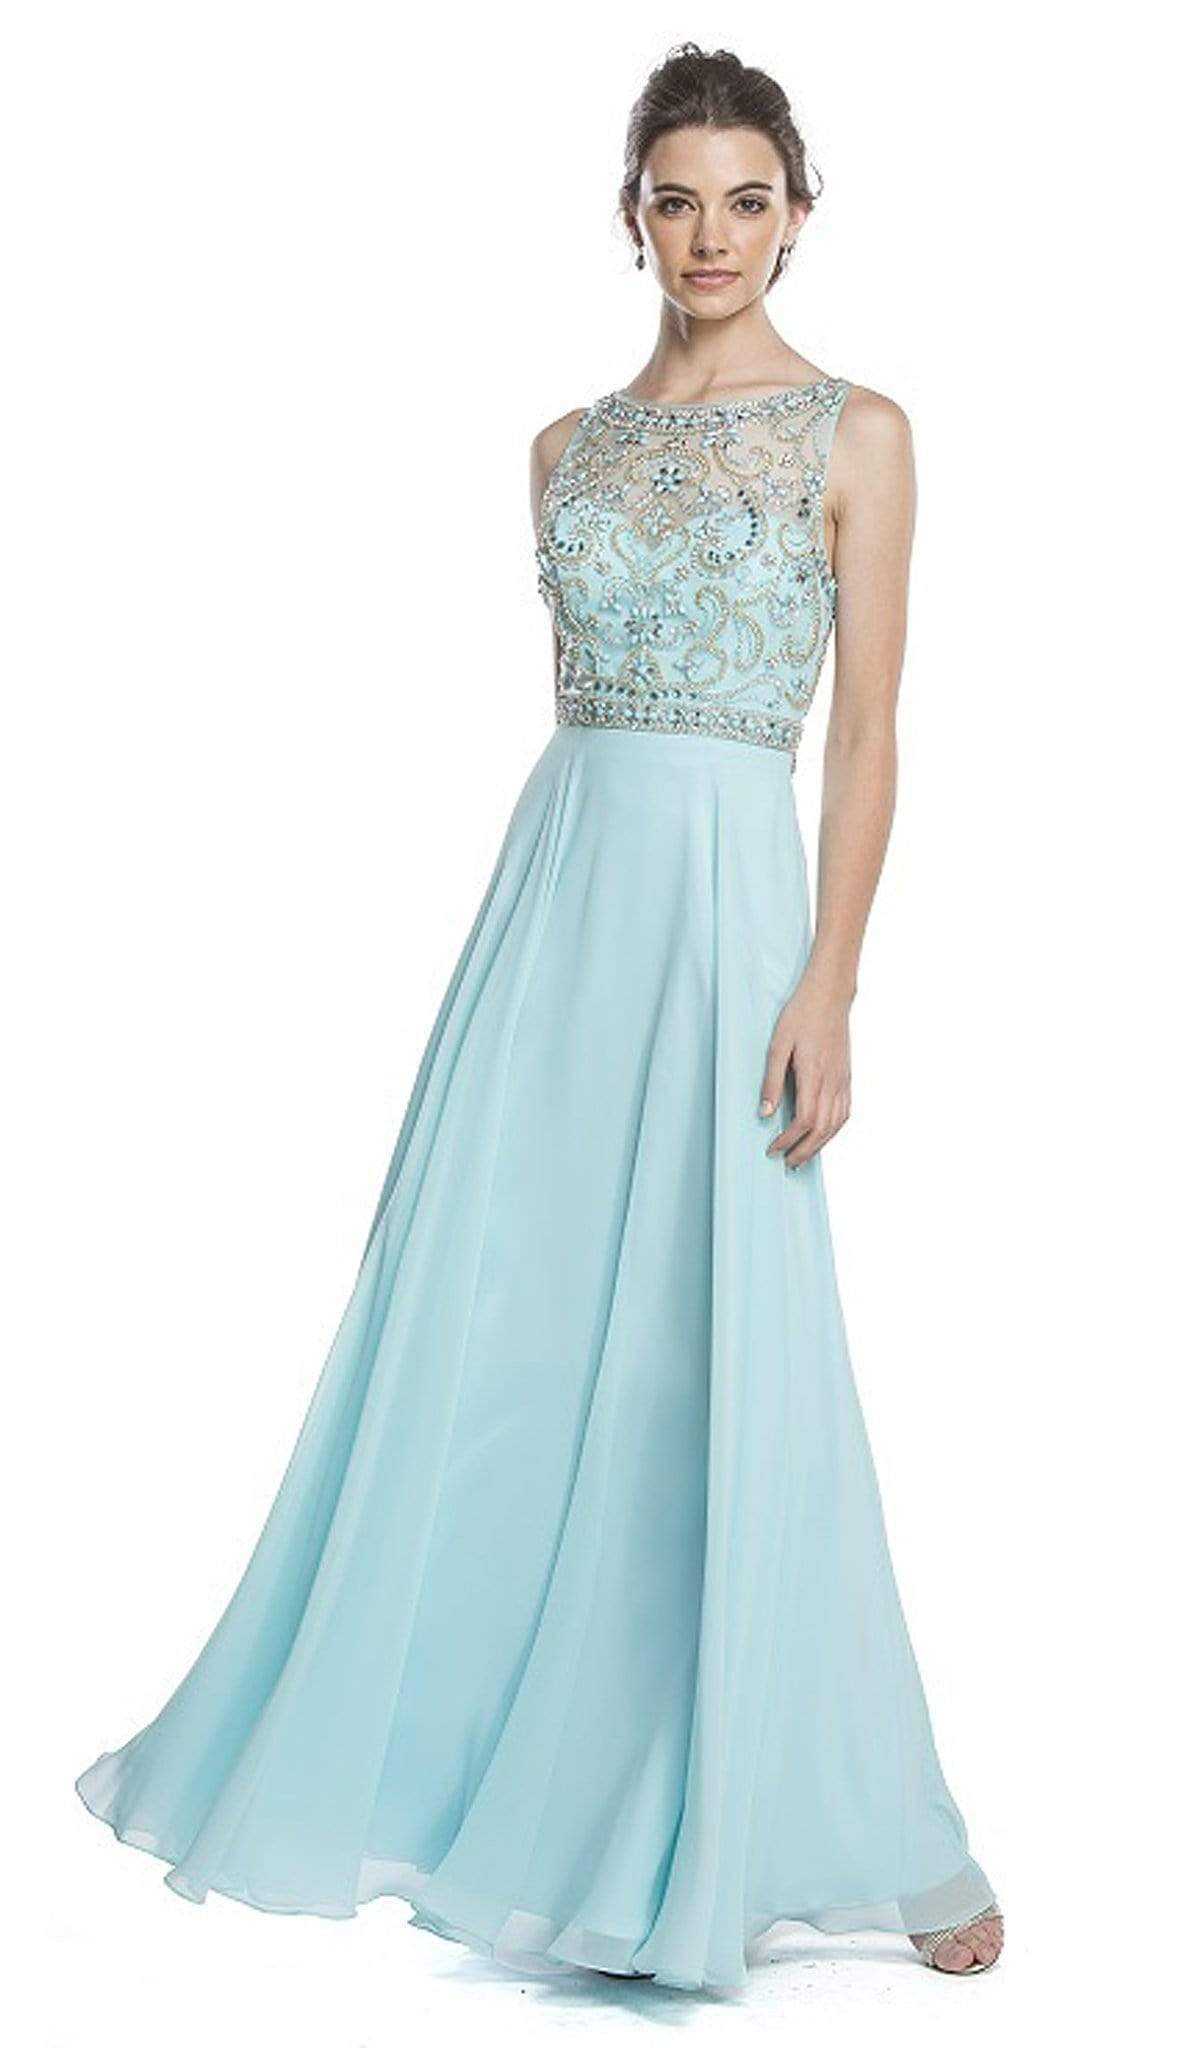 Aspeed Design, Aspeed Design - Embellished Sleeveless A-Line Evening Dress